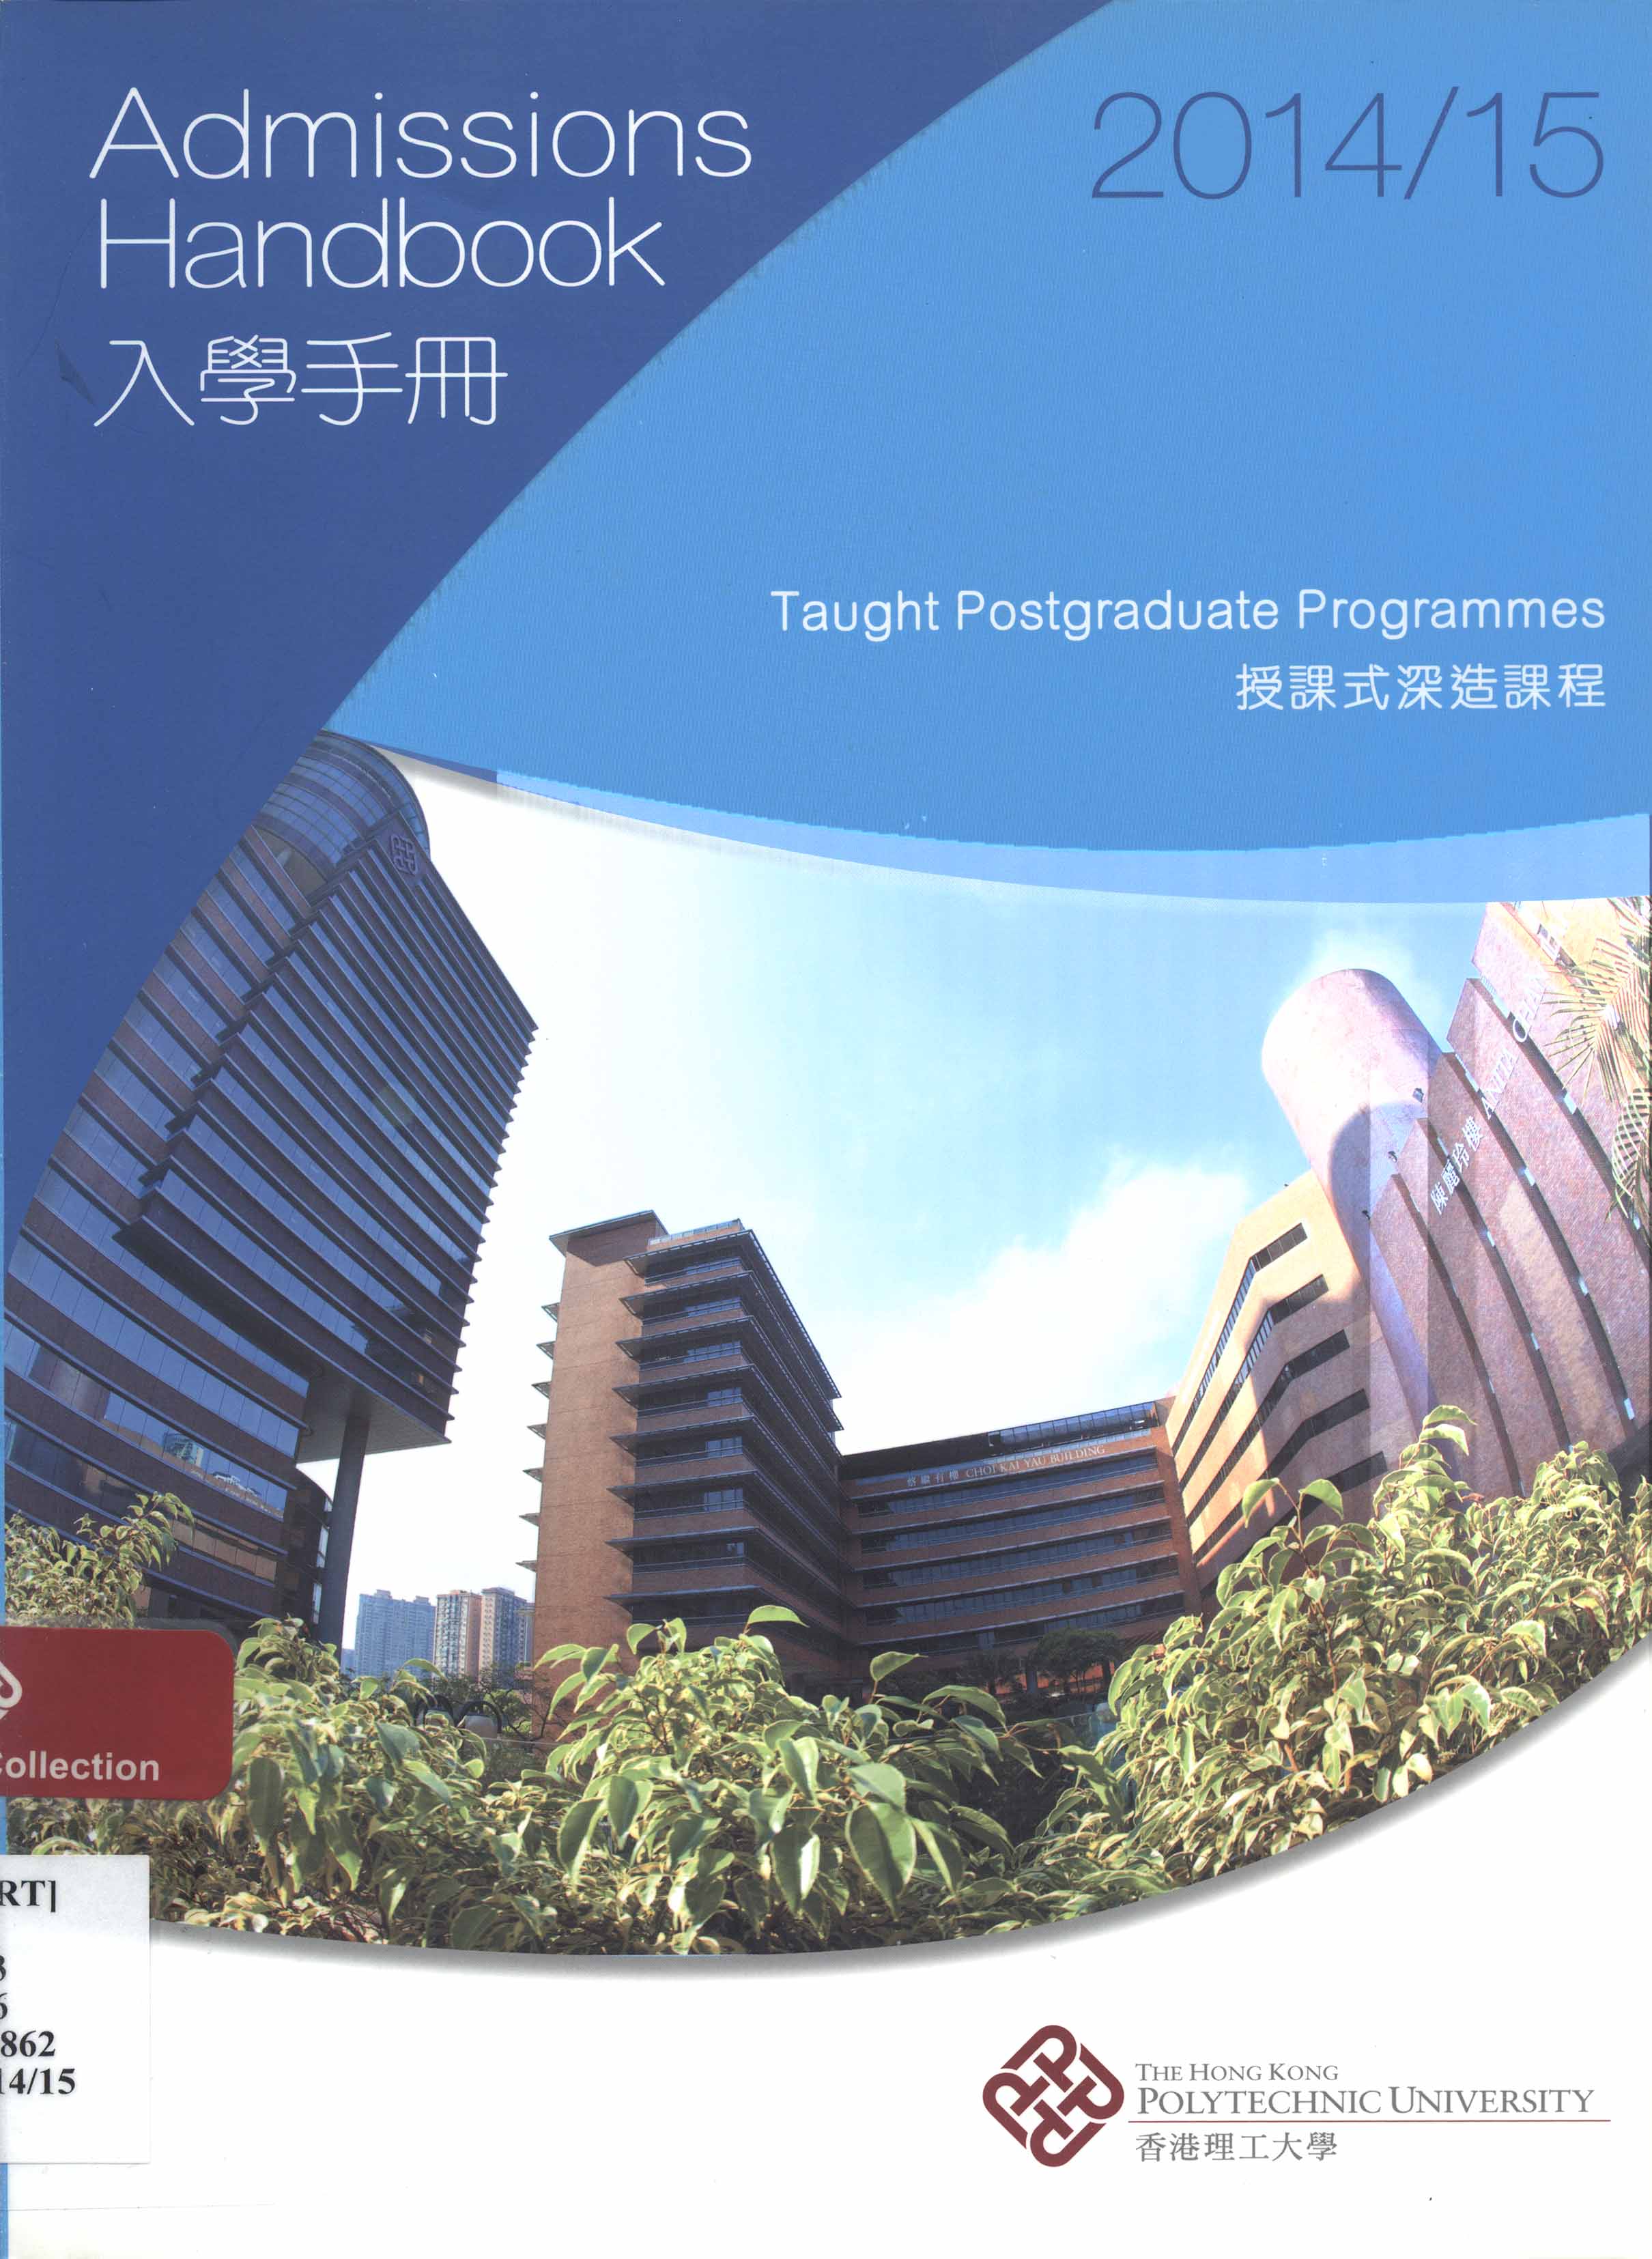 Hong Kong Polytechnic University. Taught postgraduate programmes: admissions handbook 2014/15